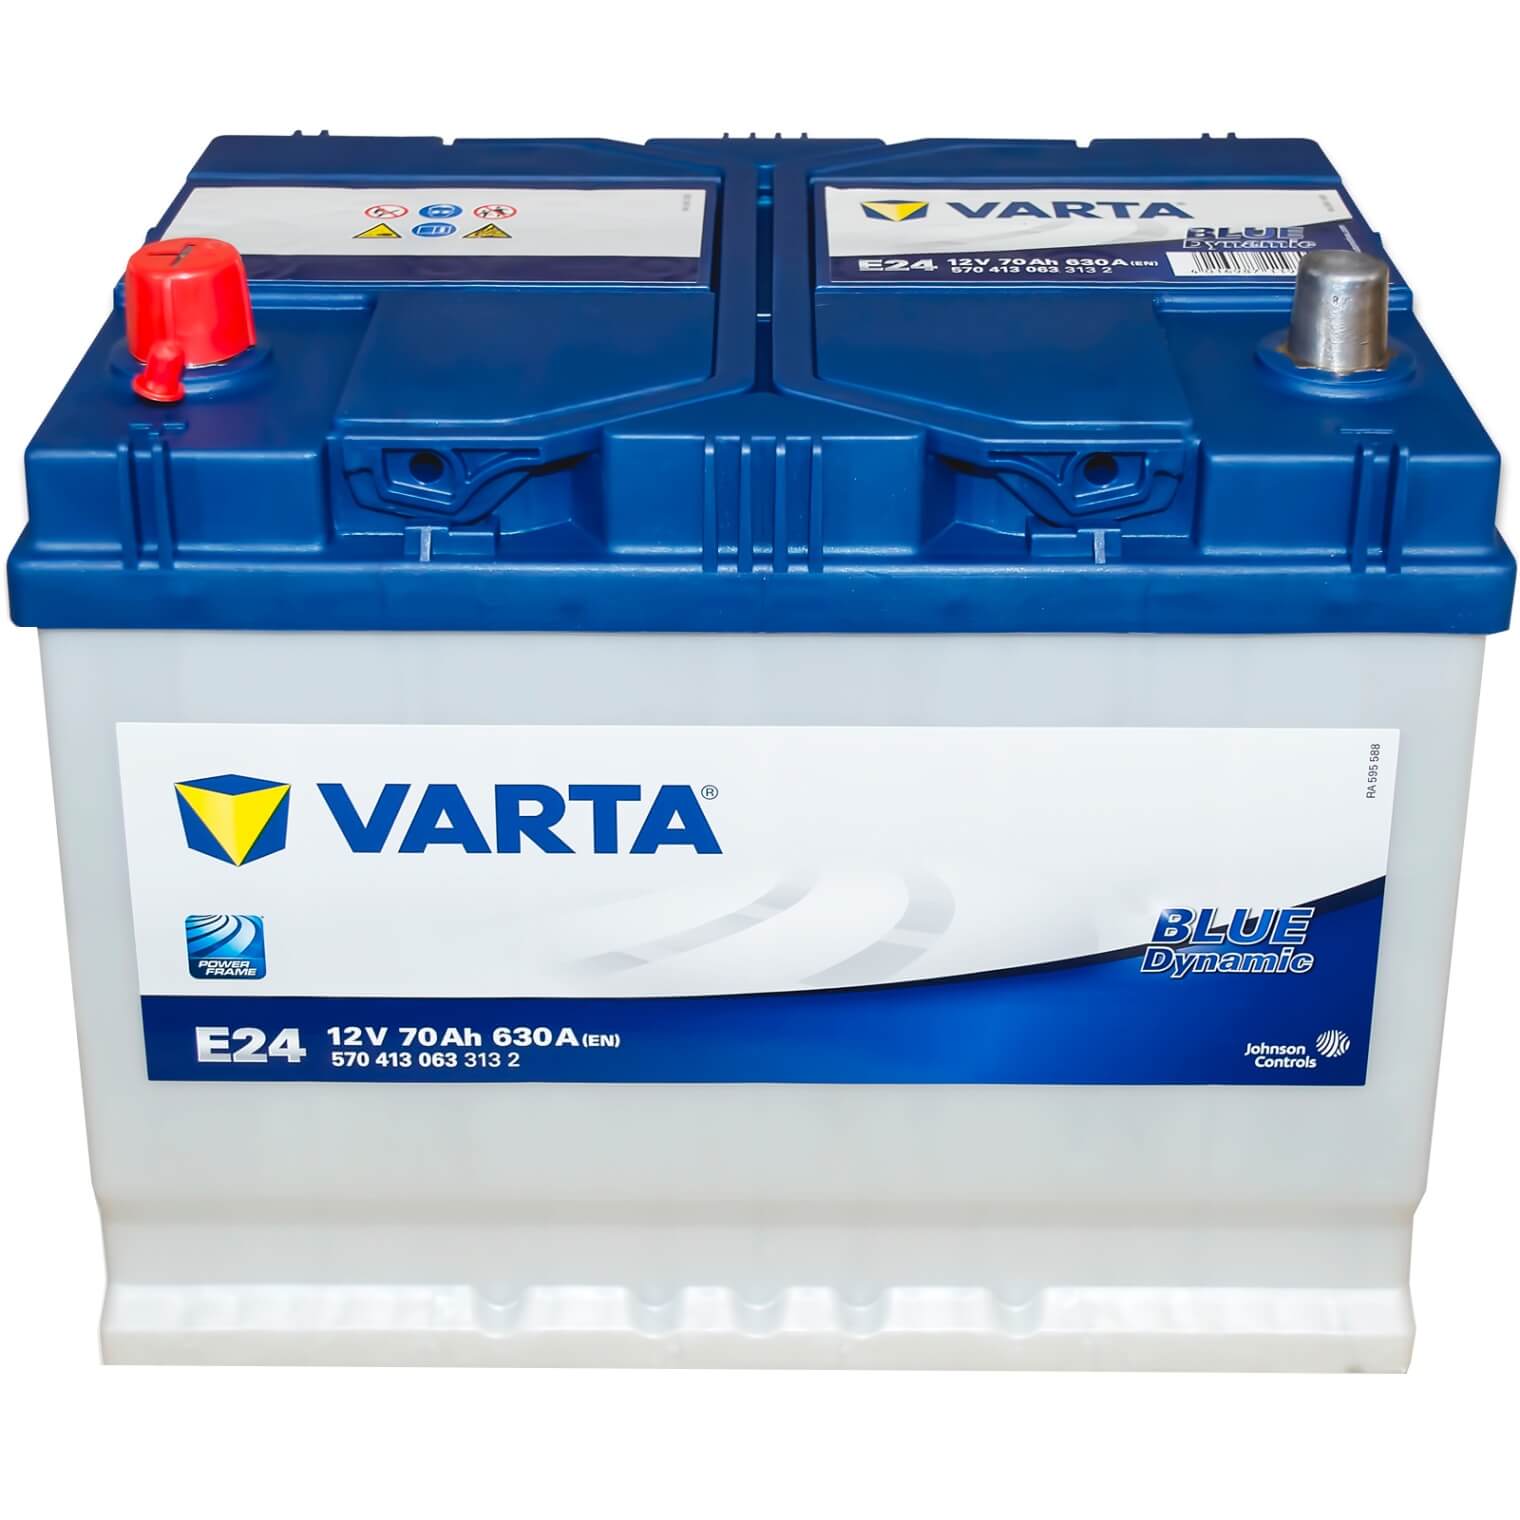 Batterie auto E24 12V 70ah/630A VARTA blue dynamic + à gauche